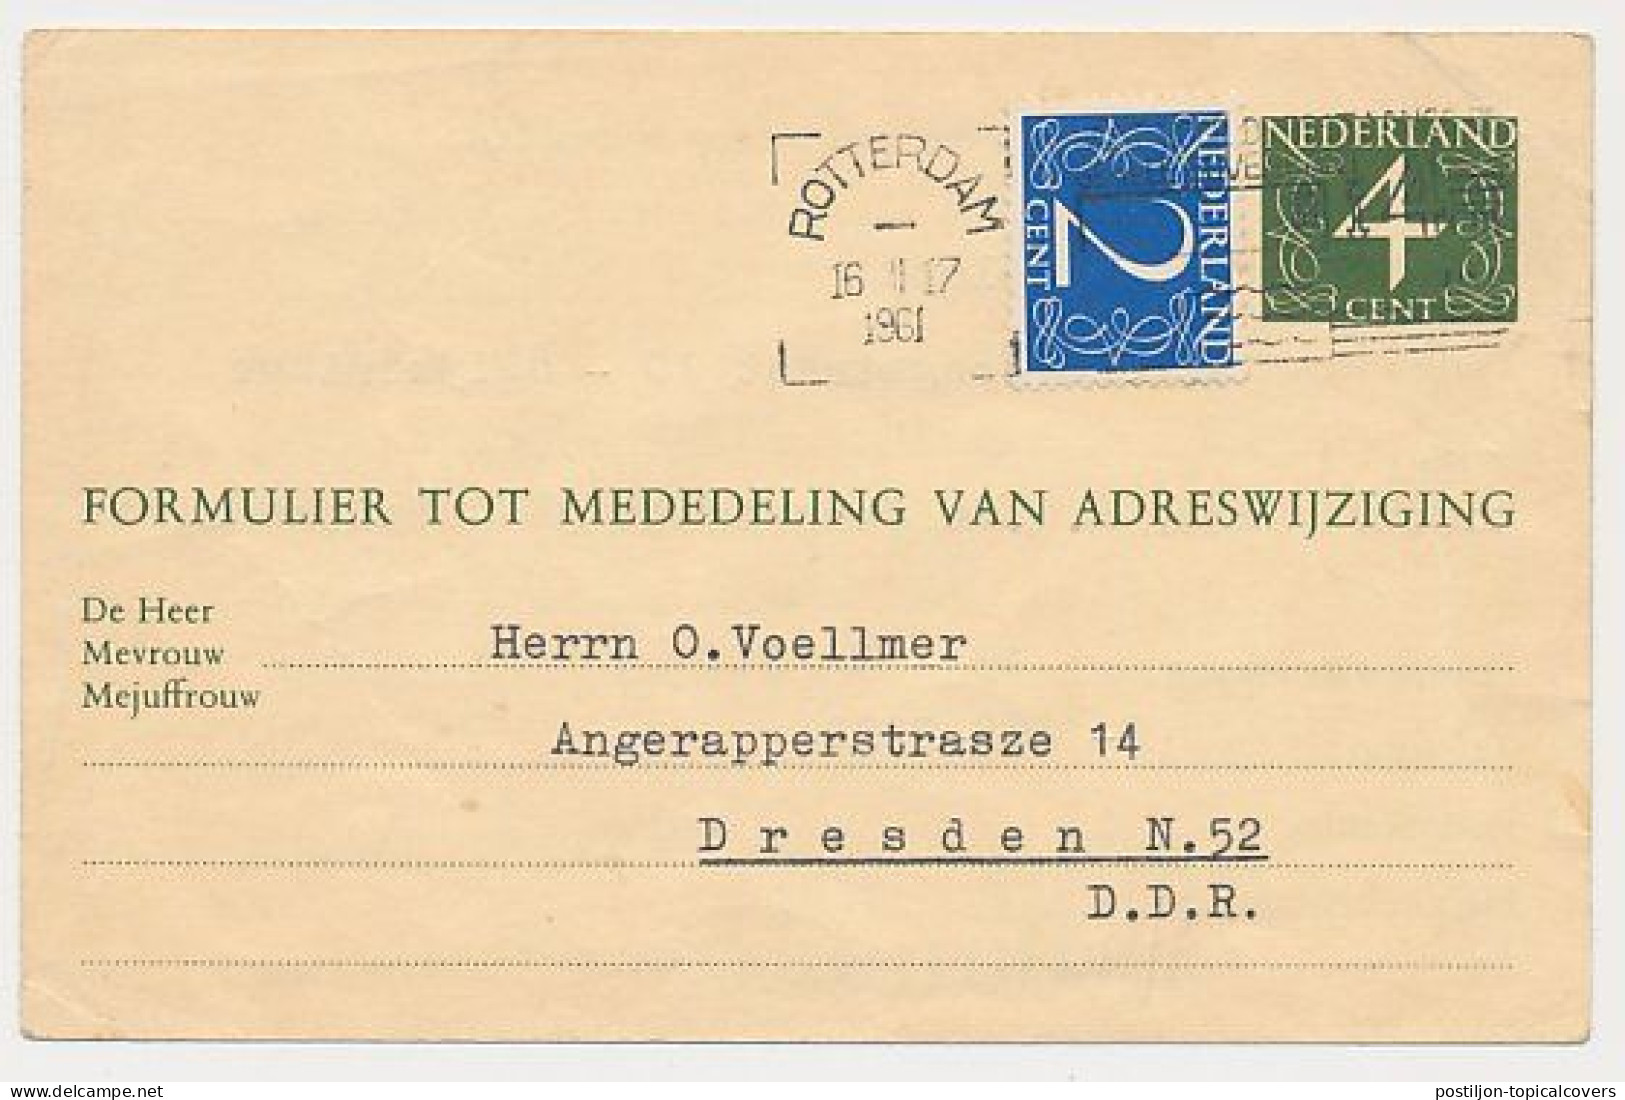 Verhuiskaart G.26 Bijfrankering Rotterdam  - DDR / Duitsland 1961 - Lettres & Documents